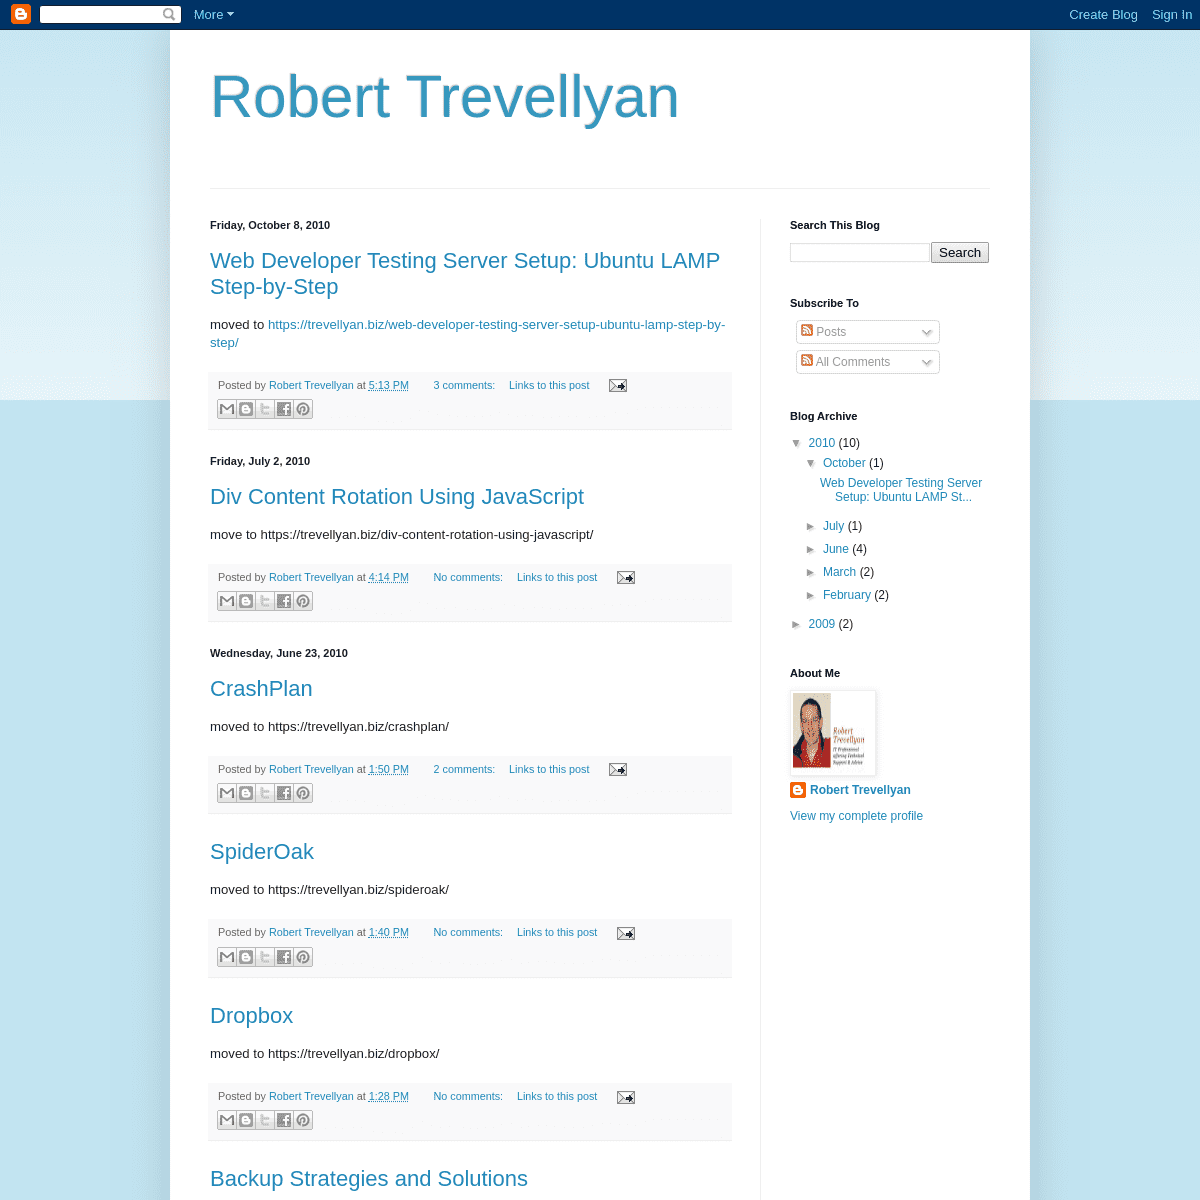 A complete backup of roberttrevellyan.blogspot.com